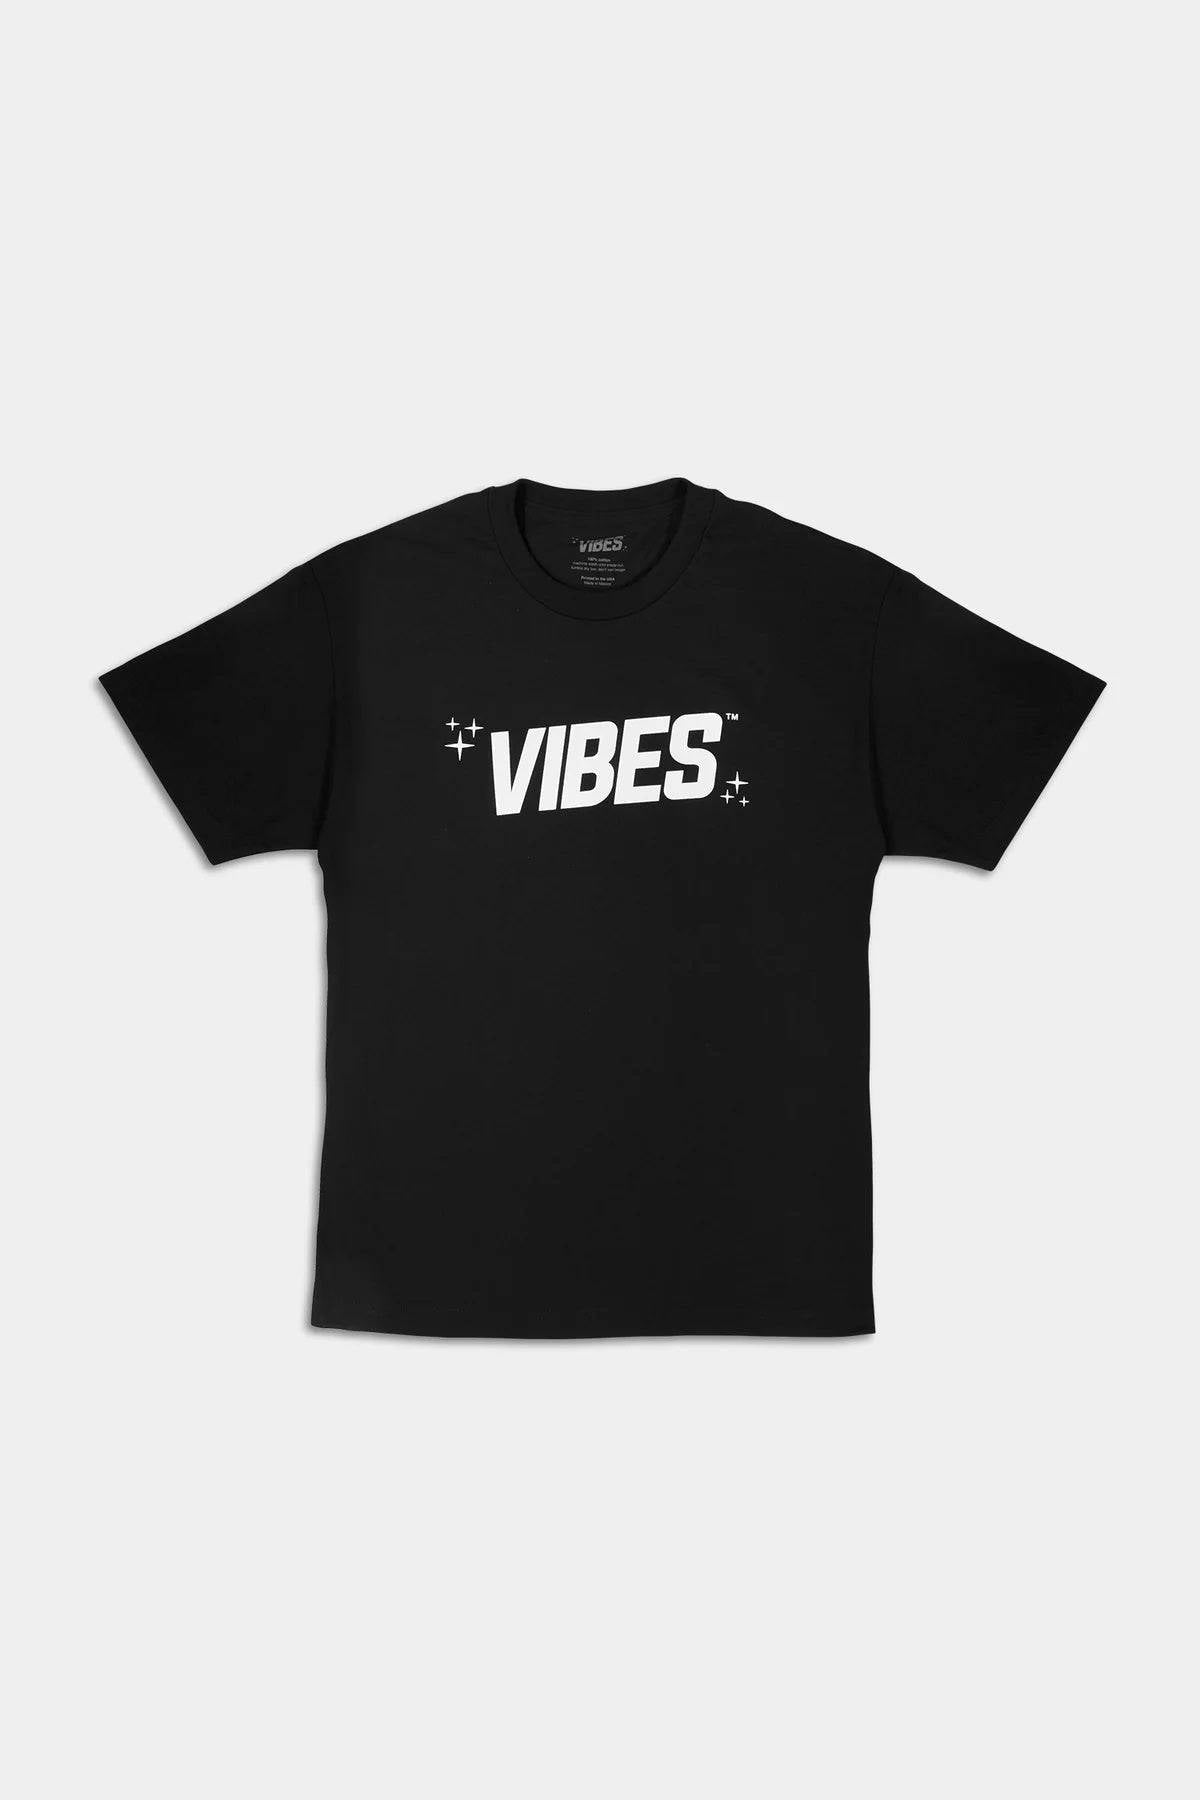 VIBES Black With White Logo T-Shirt Large